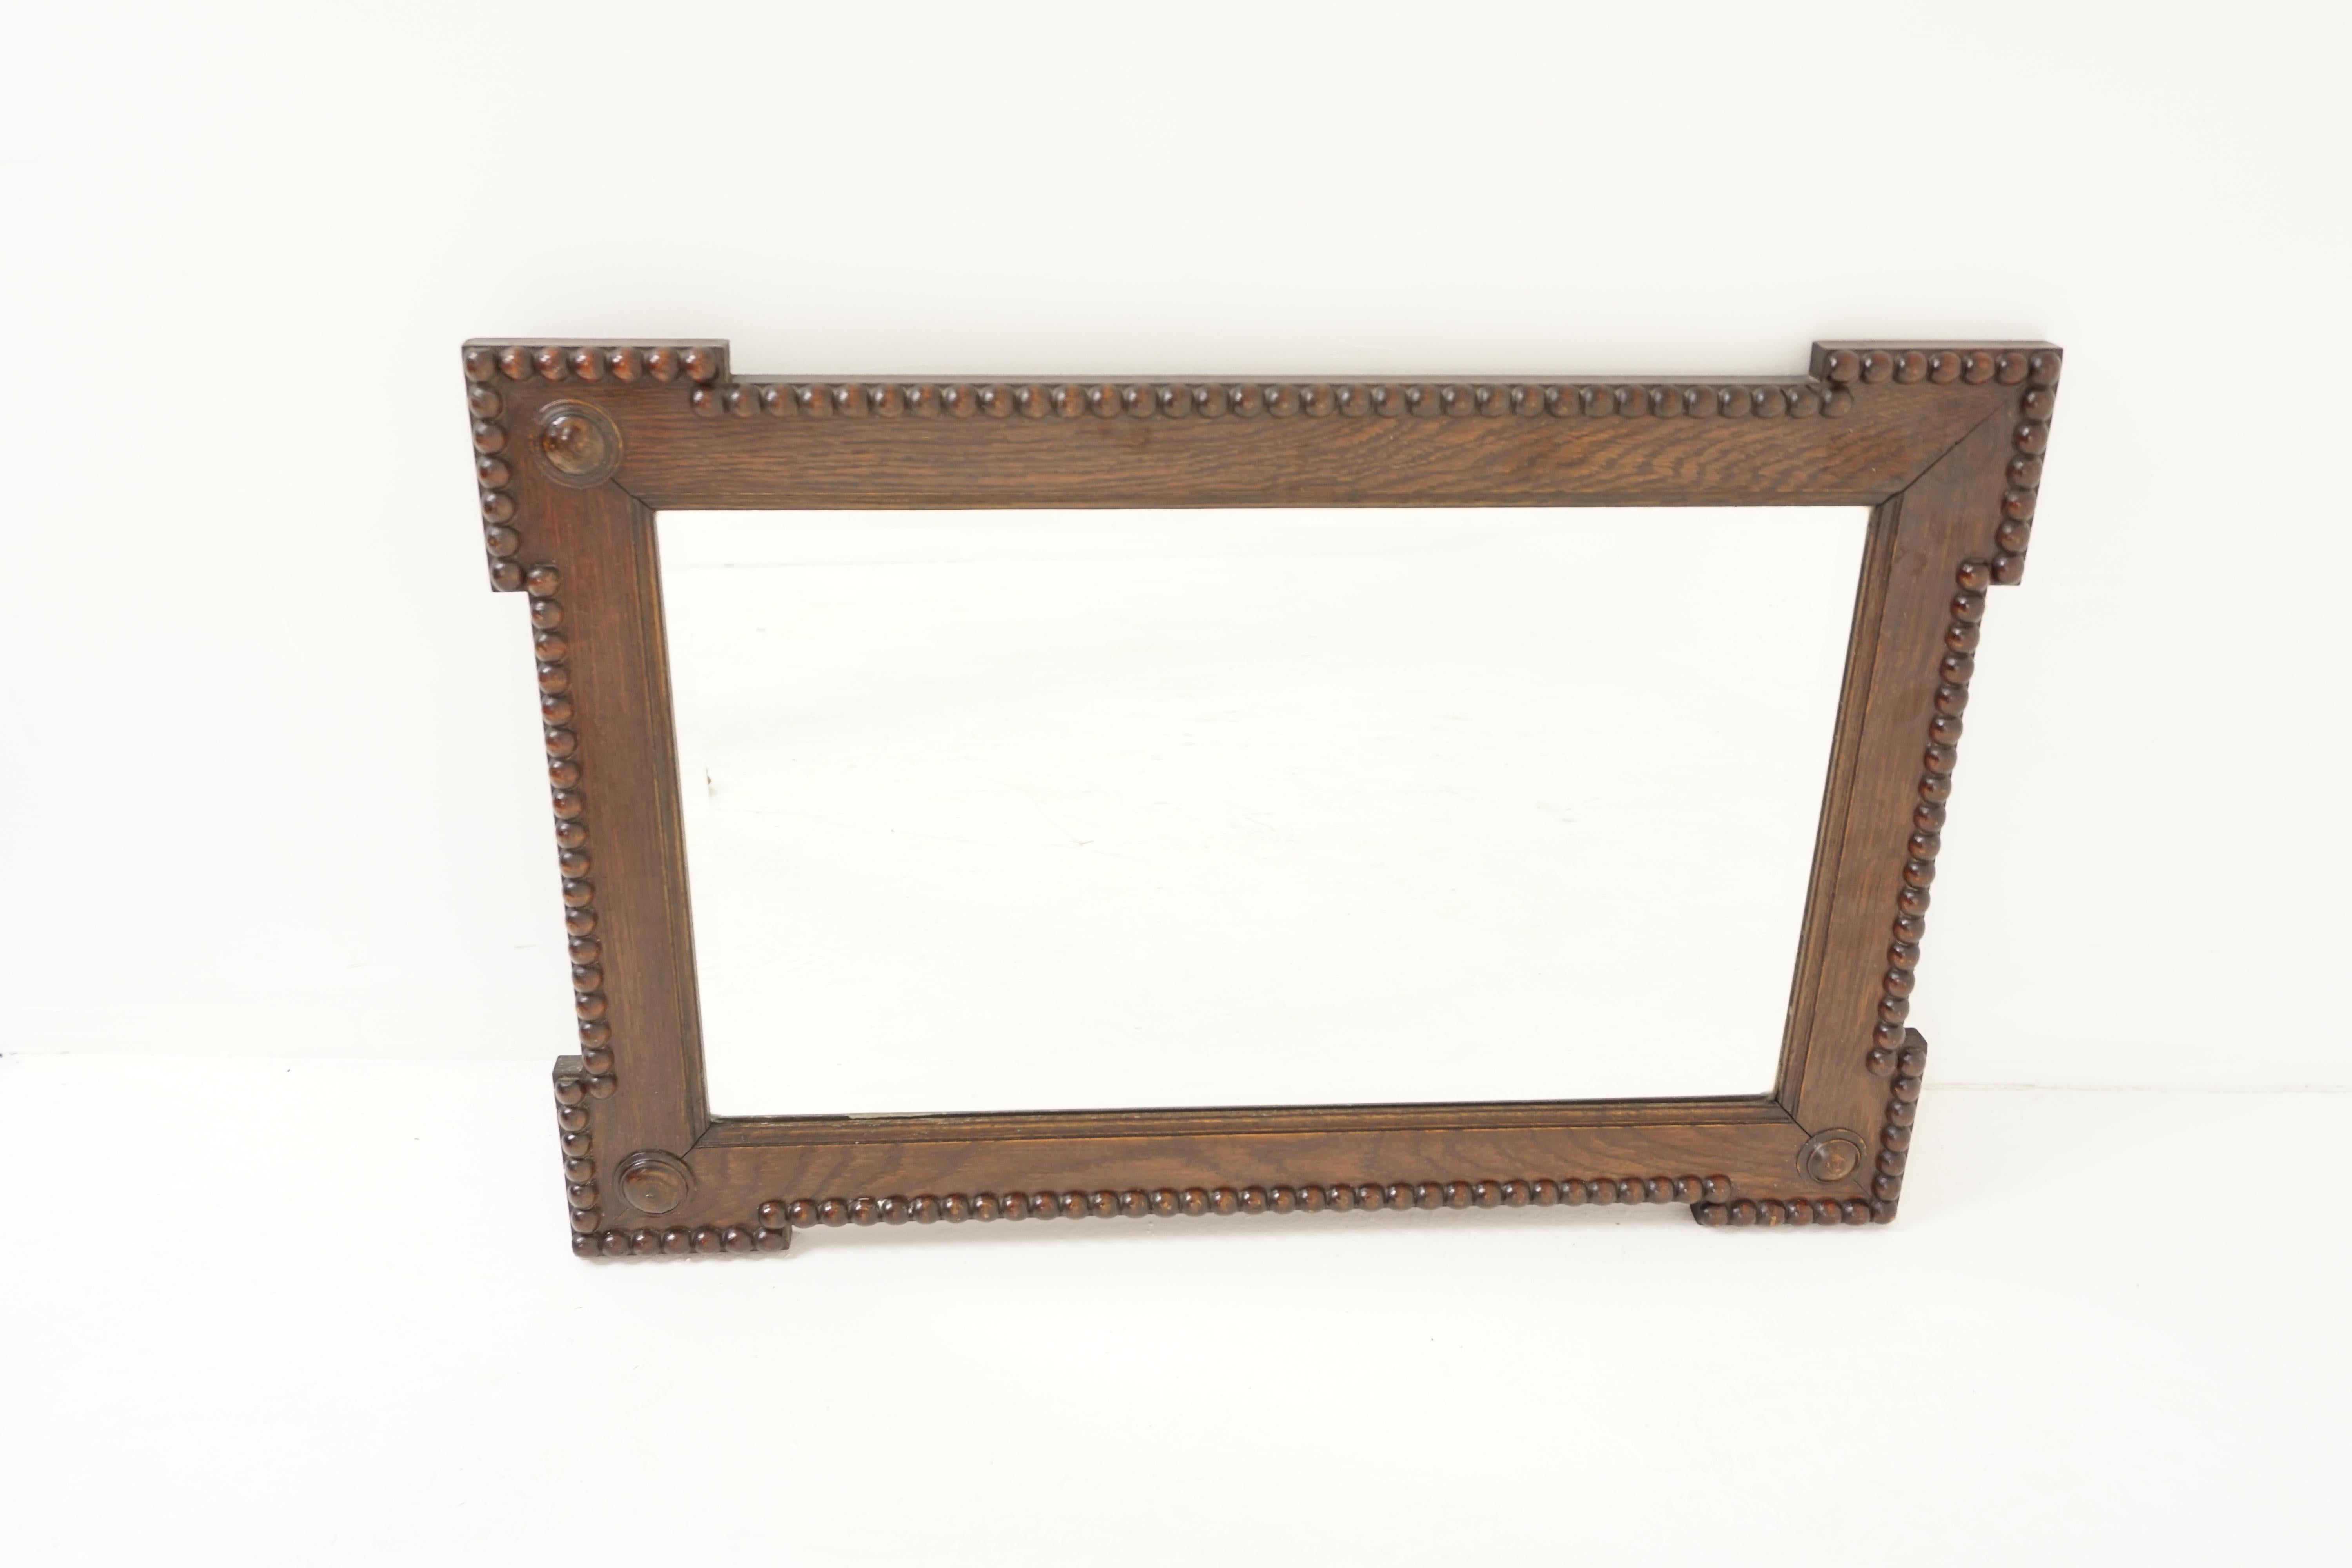 Hand-Crafted Antique Rectangular Beveled Mirror in Oak Frame, Scotland 1920, B1917